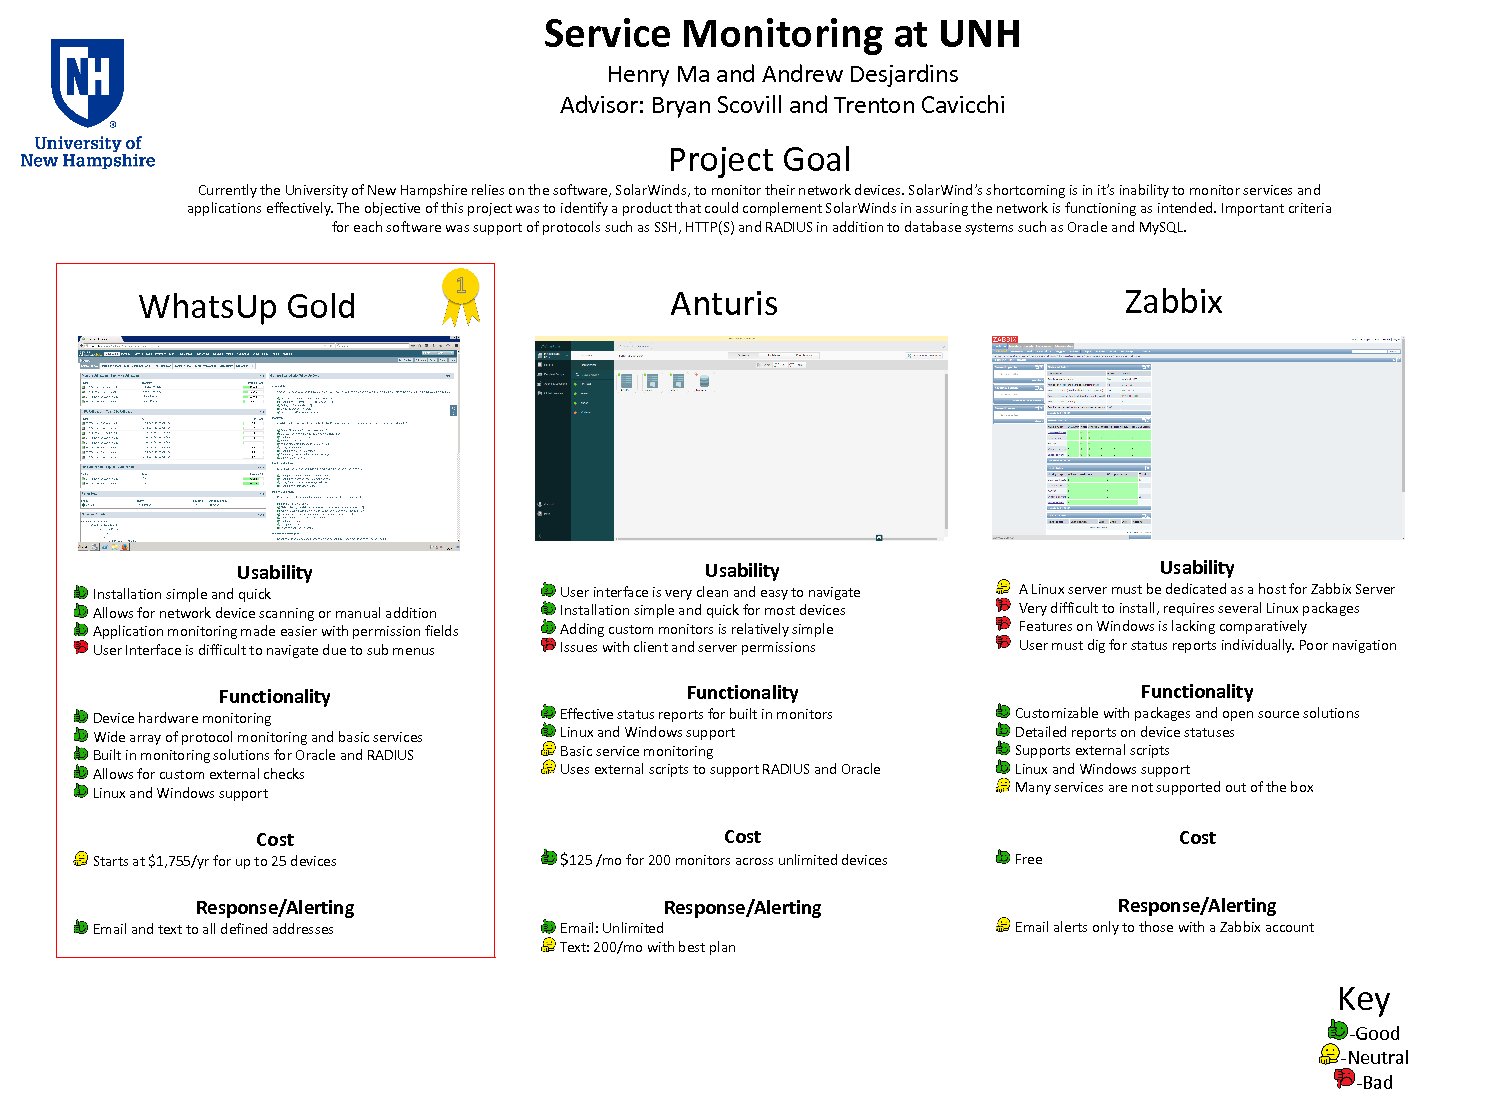 Service Monitoring At Unh by hgf2